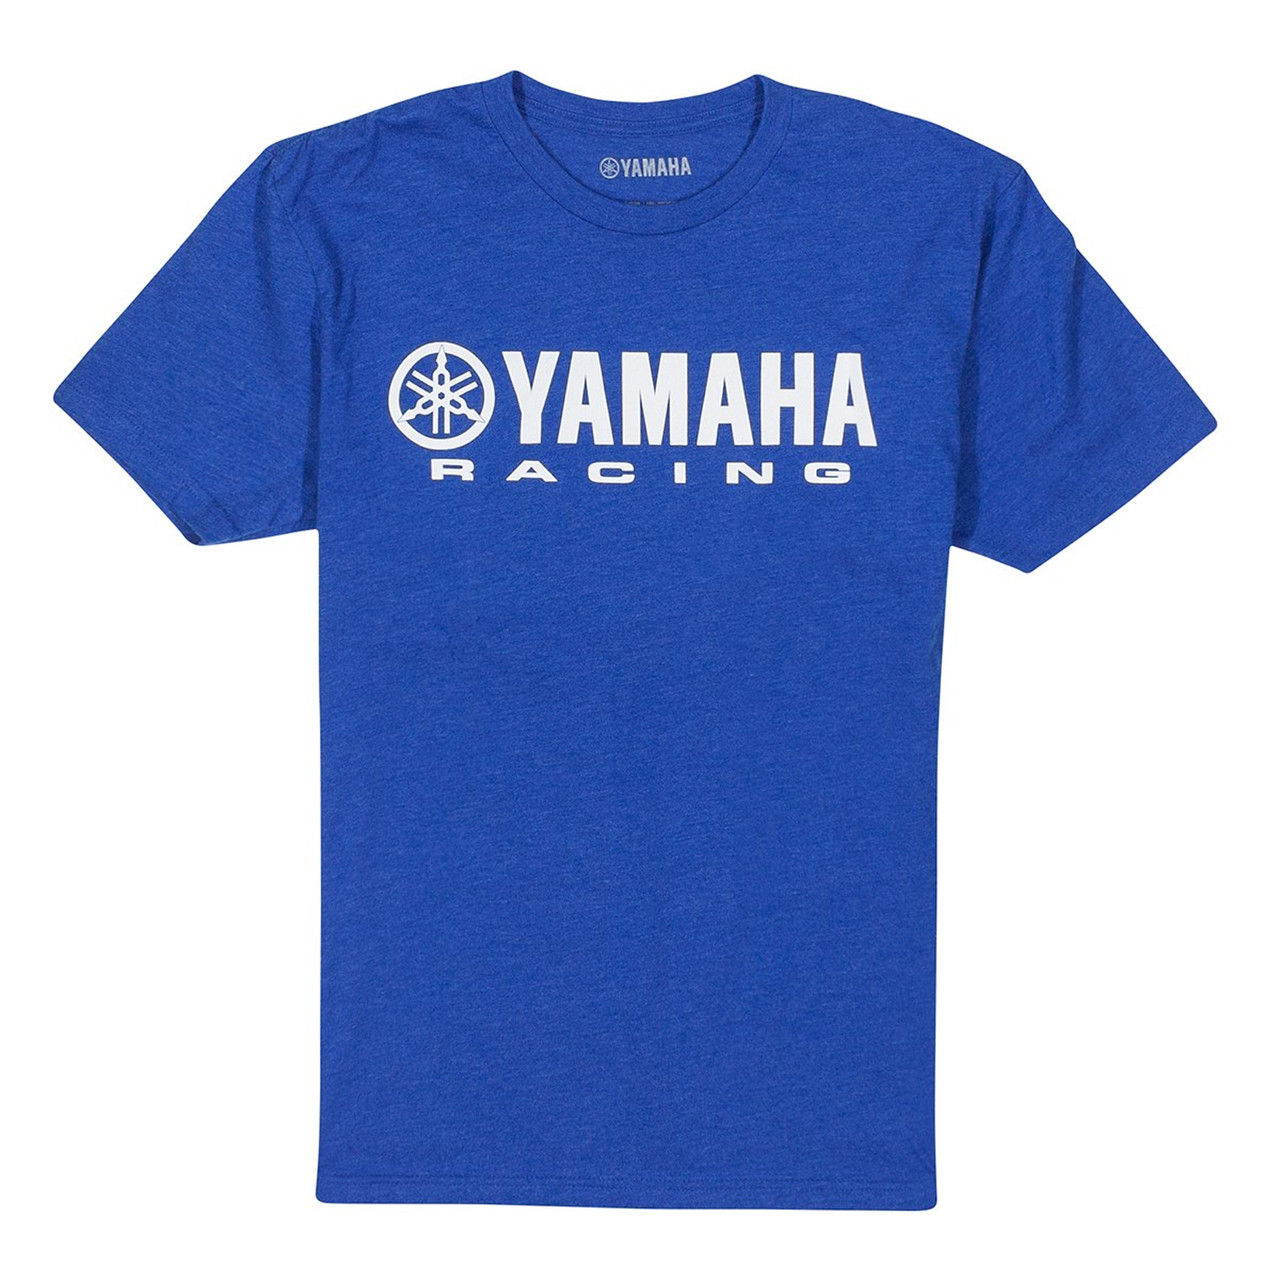 Yamaha New OEM, Branded Men's Racing Classic Short Sleeve Tee, VDF-19TYR-BL-LG